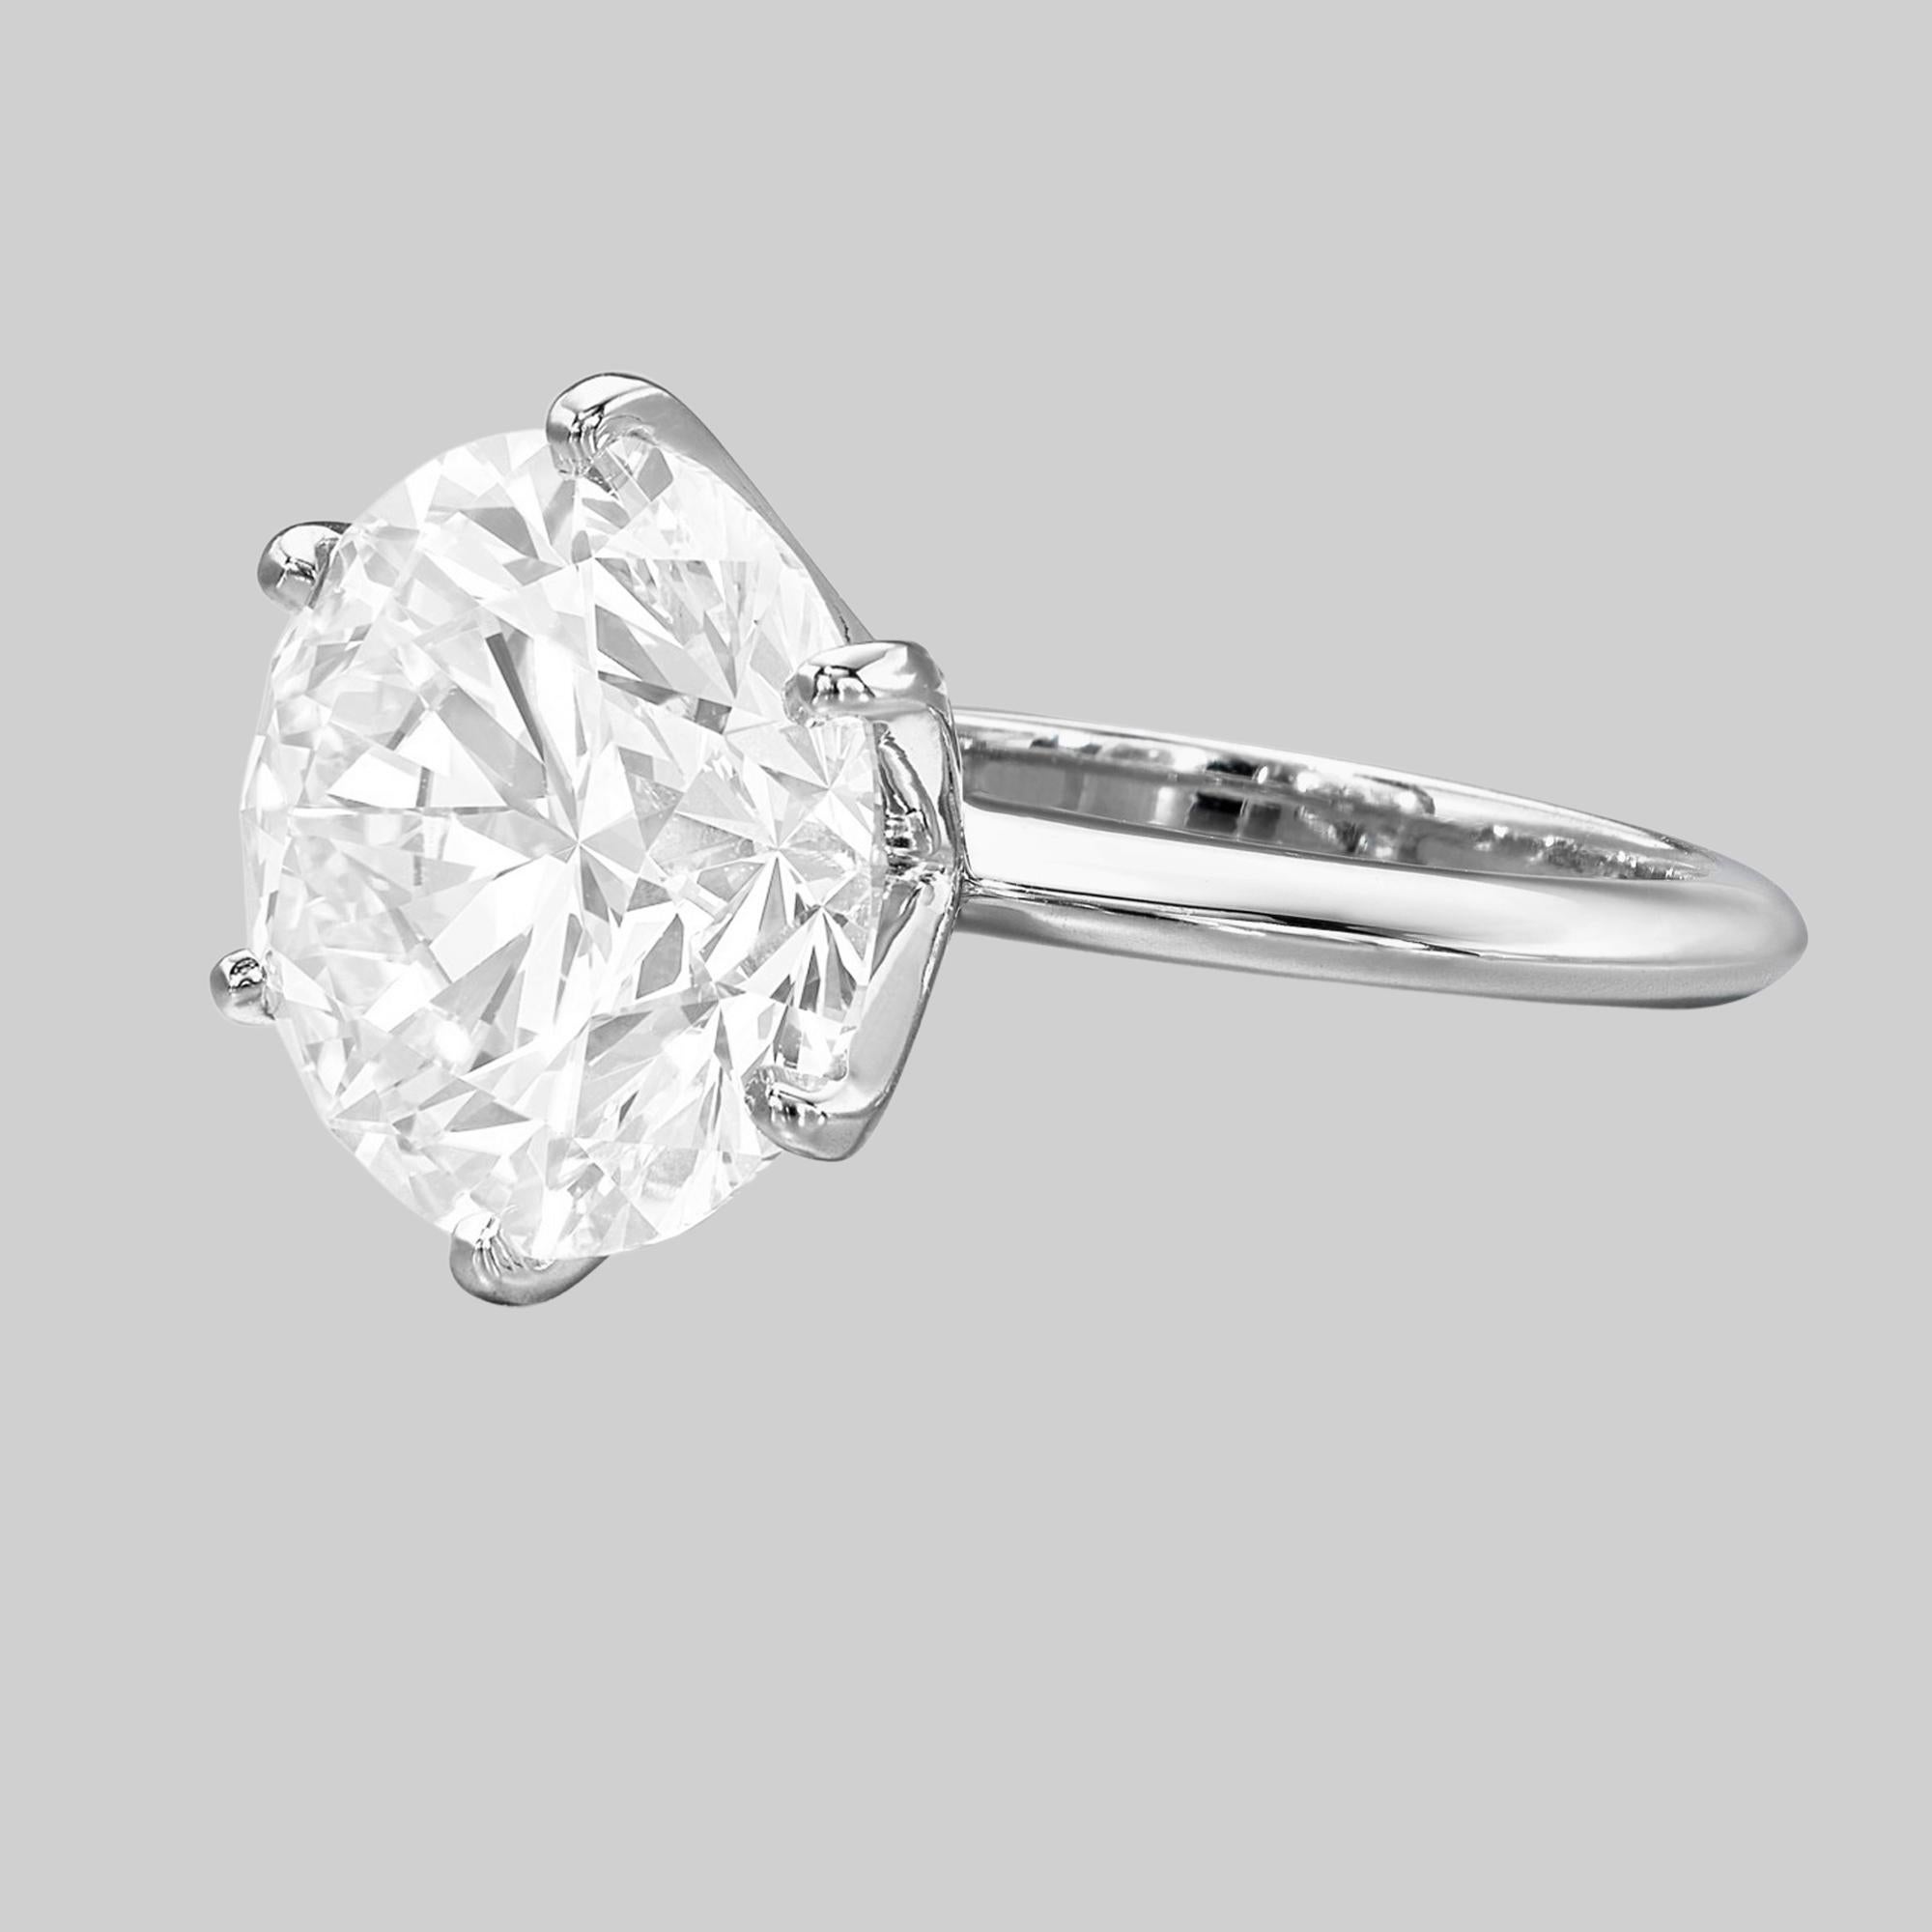 4.5 carat round diamond ring